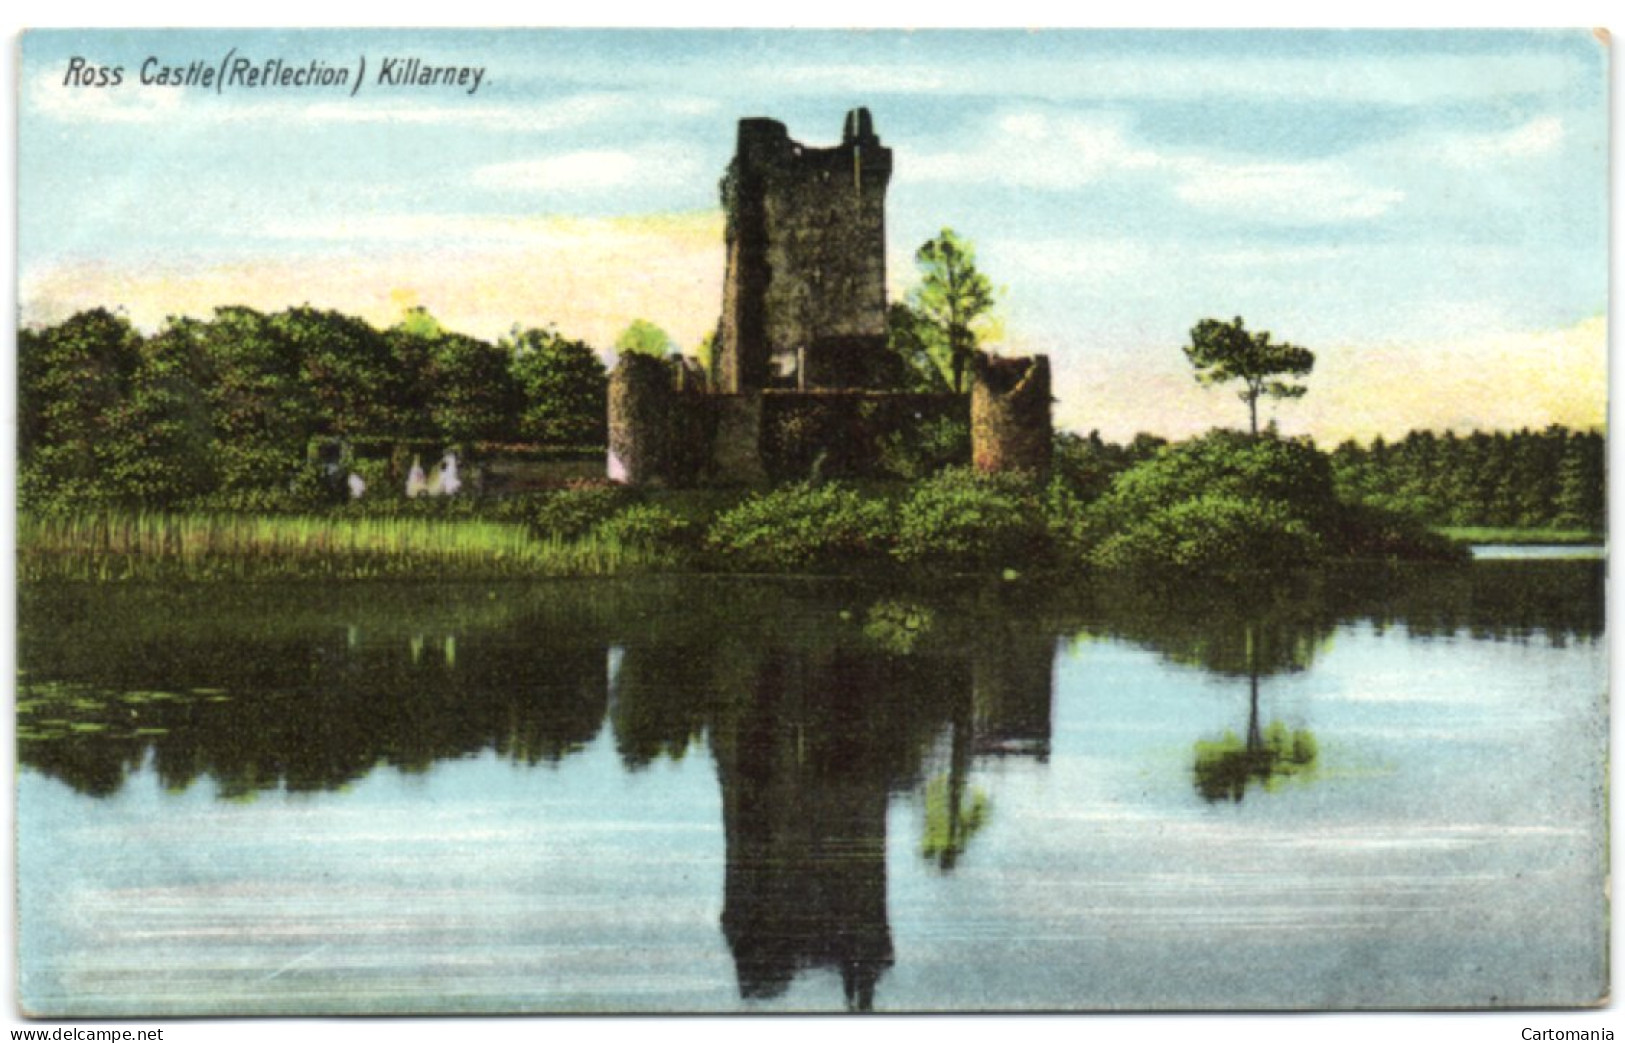 Ross Castle (Reflection) - Killarney - Kerry